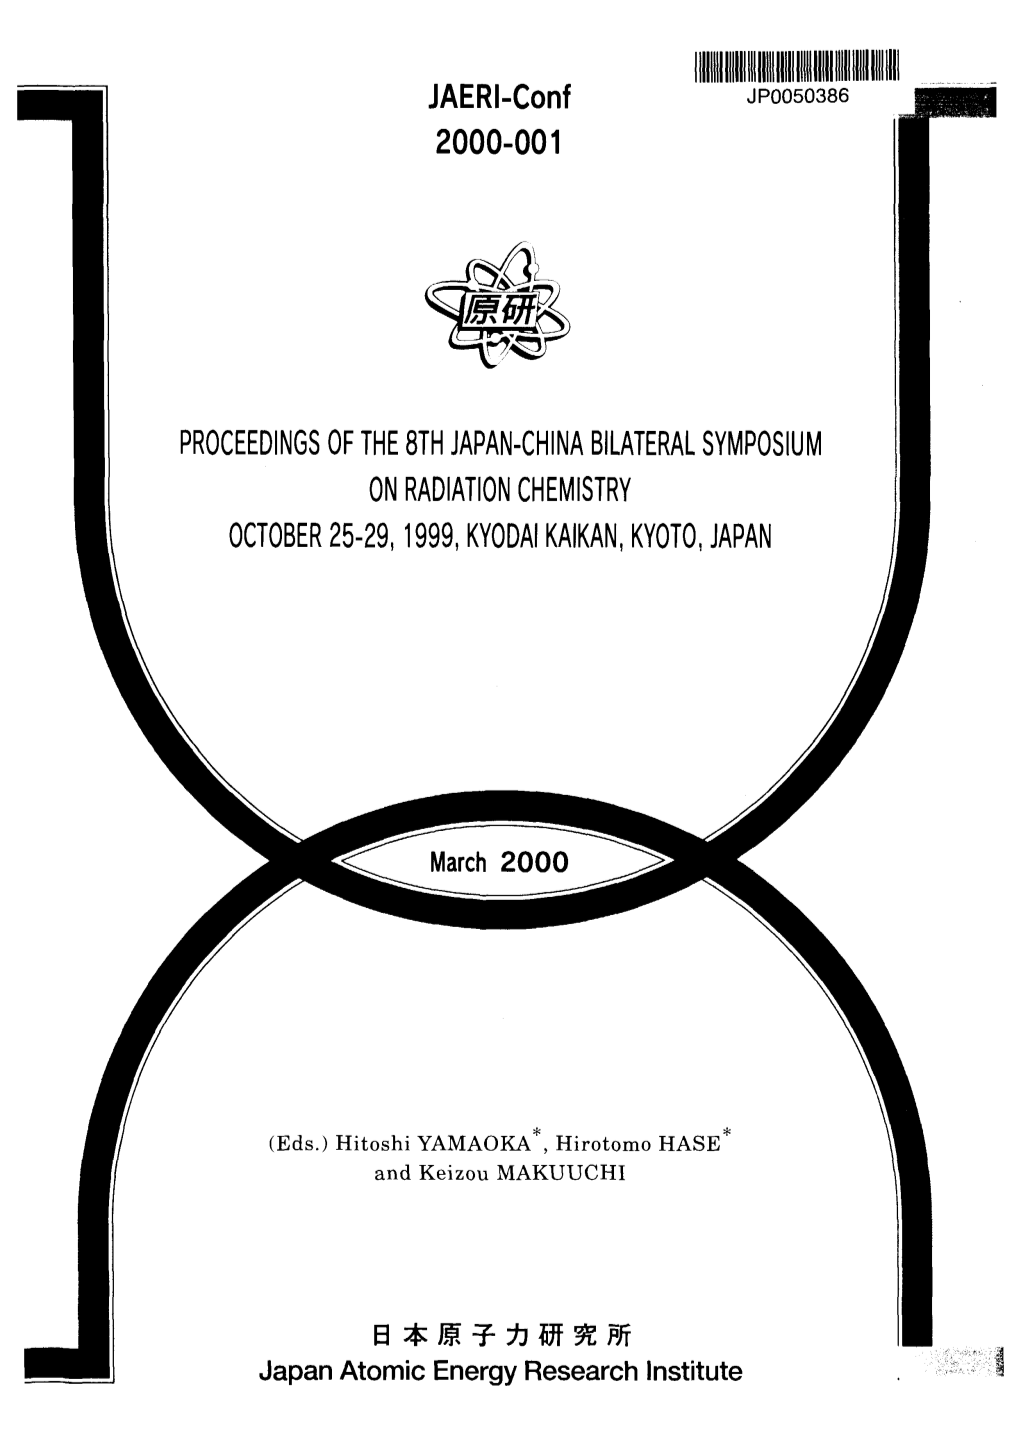 JAERI-Conf 2000-001 PROCEEDINGS of the 8TH